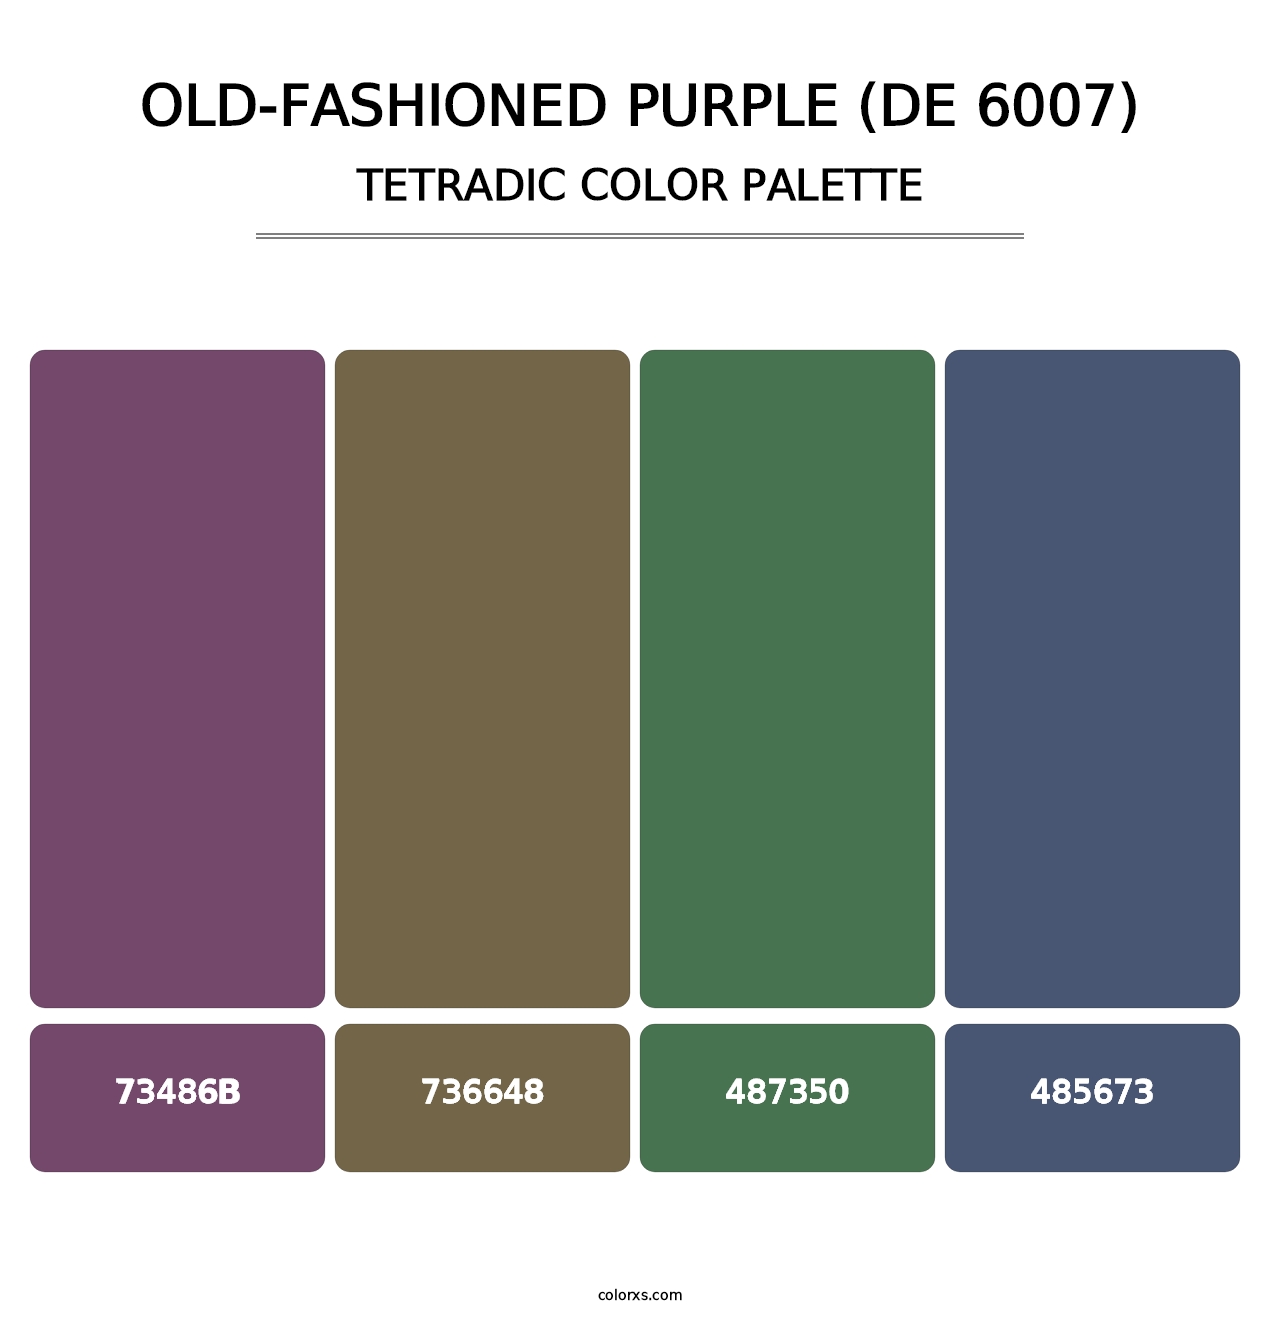 Old-Fashioned Purple (DE 6007) - Tetradic Color Palette